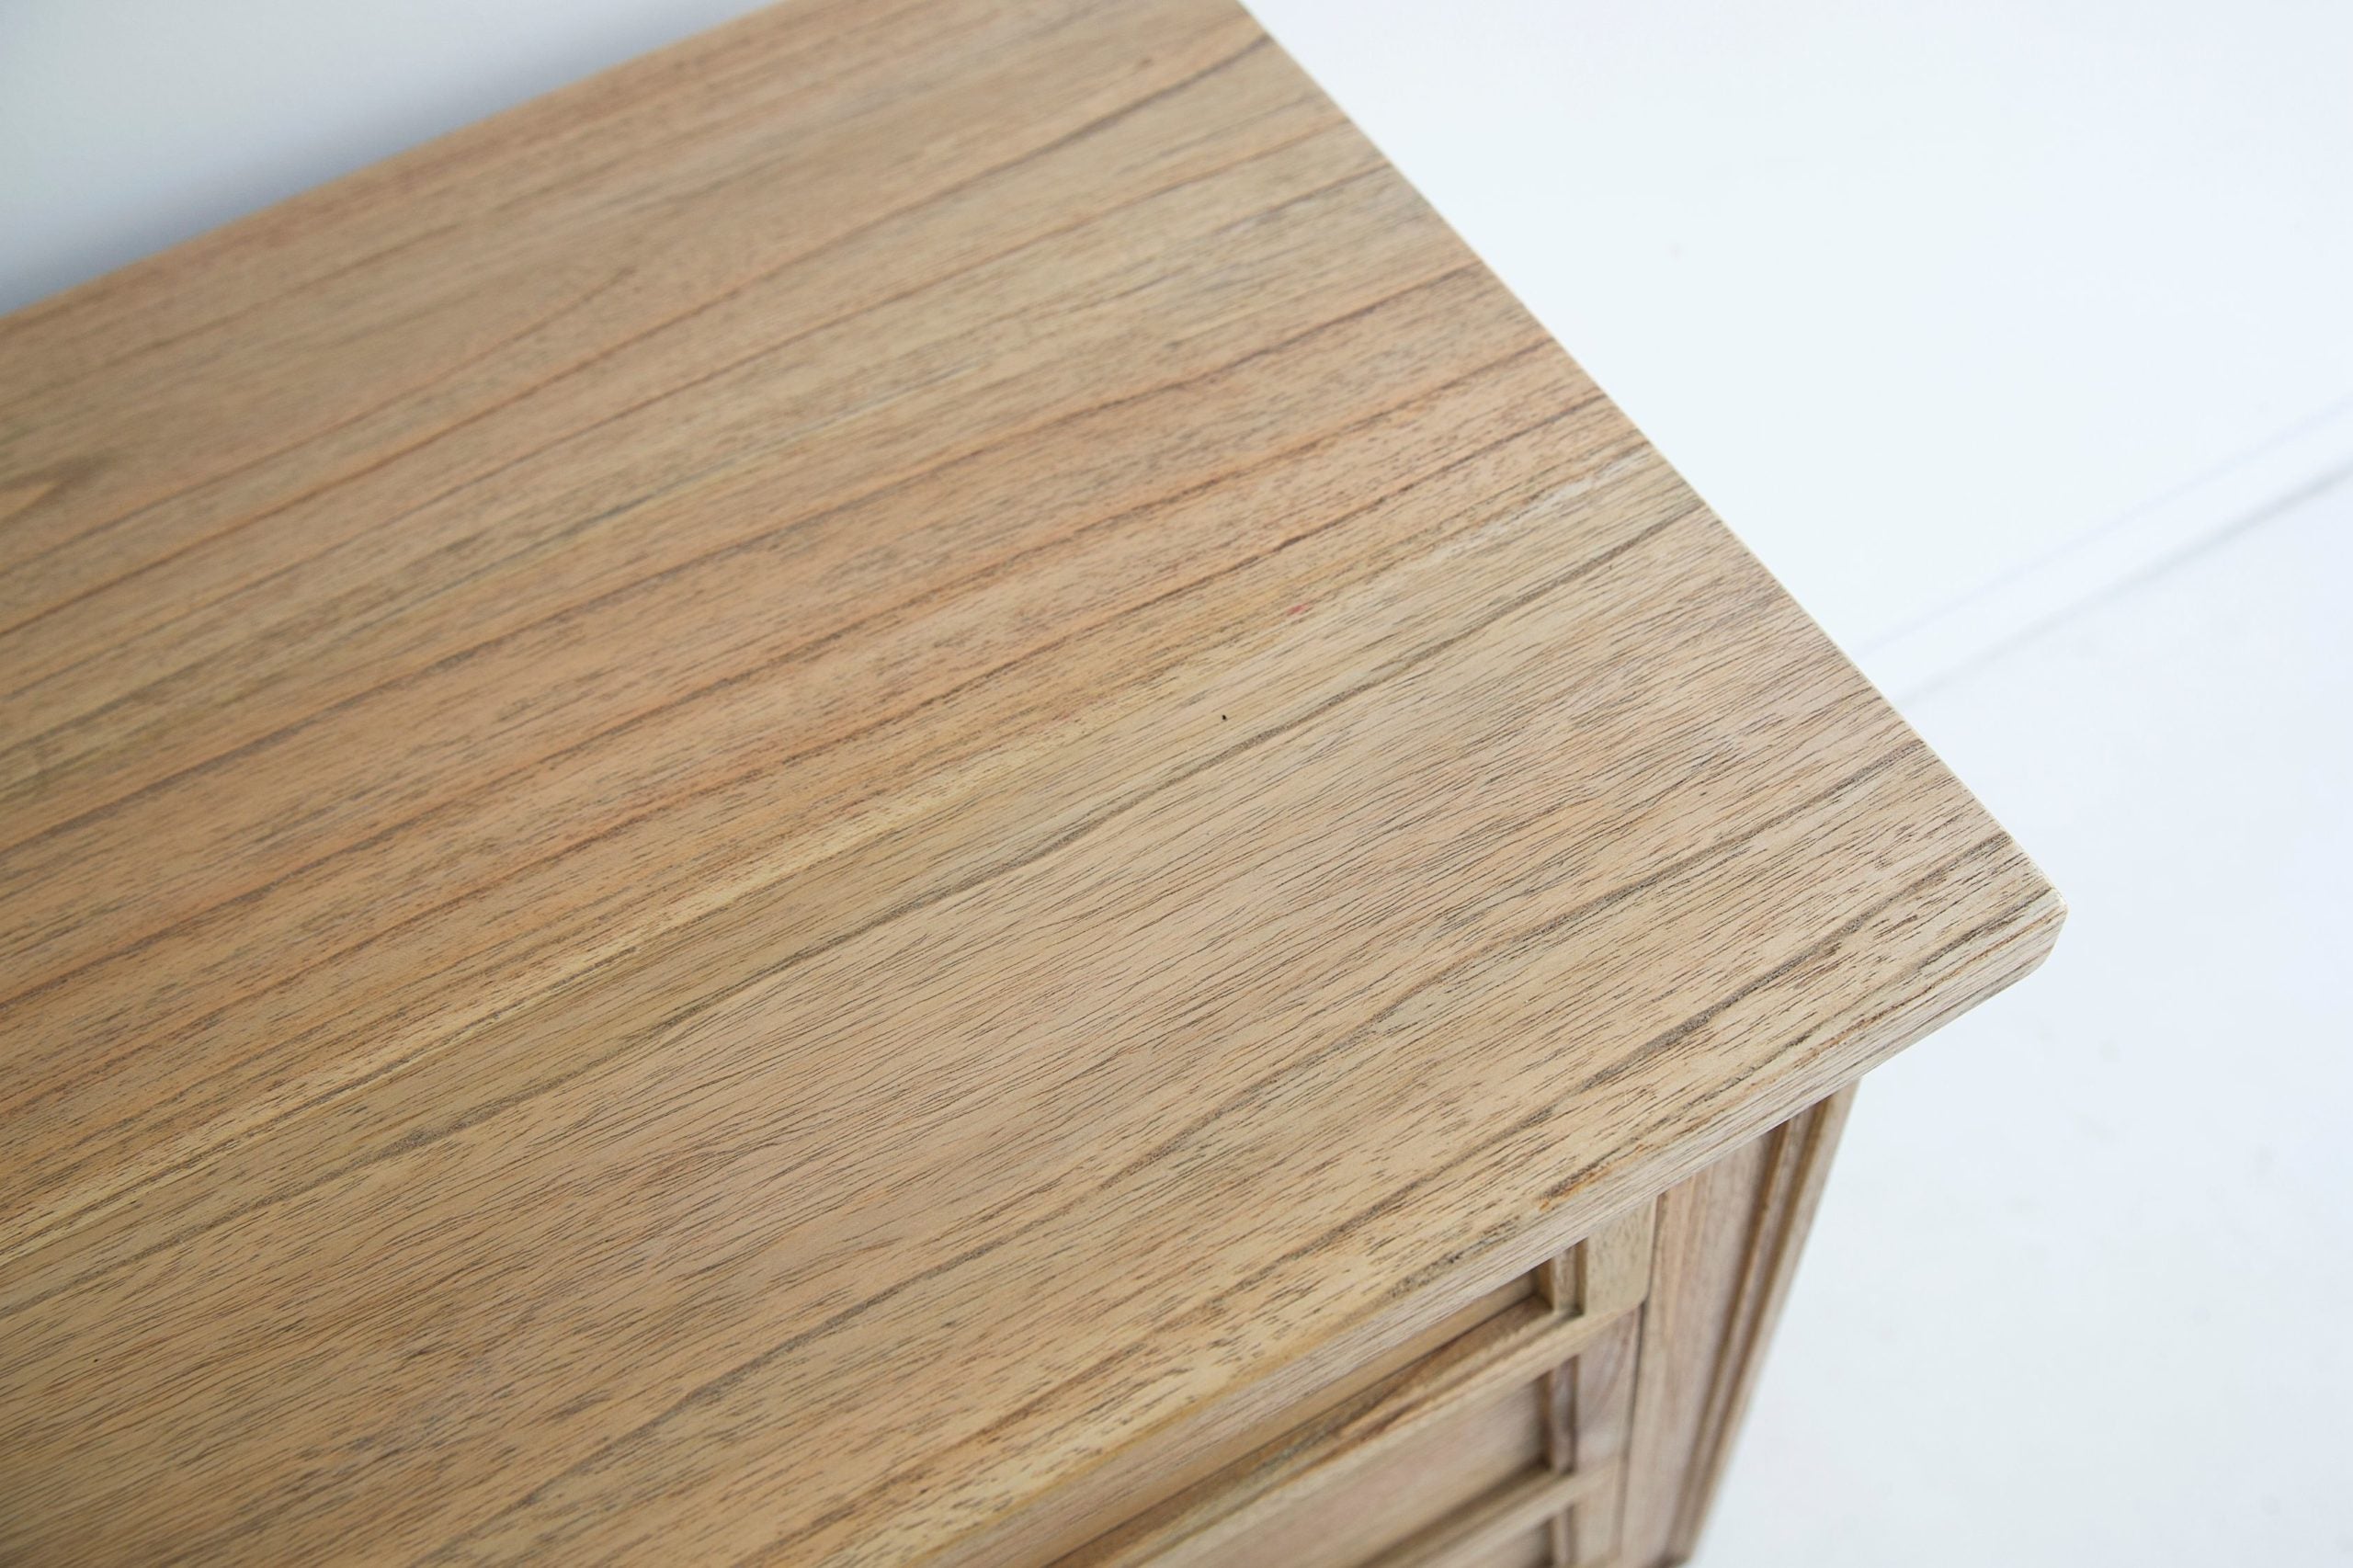 Vaucluse White Cedar Dresser – Weathered Oak – 5 Drawer